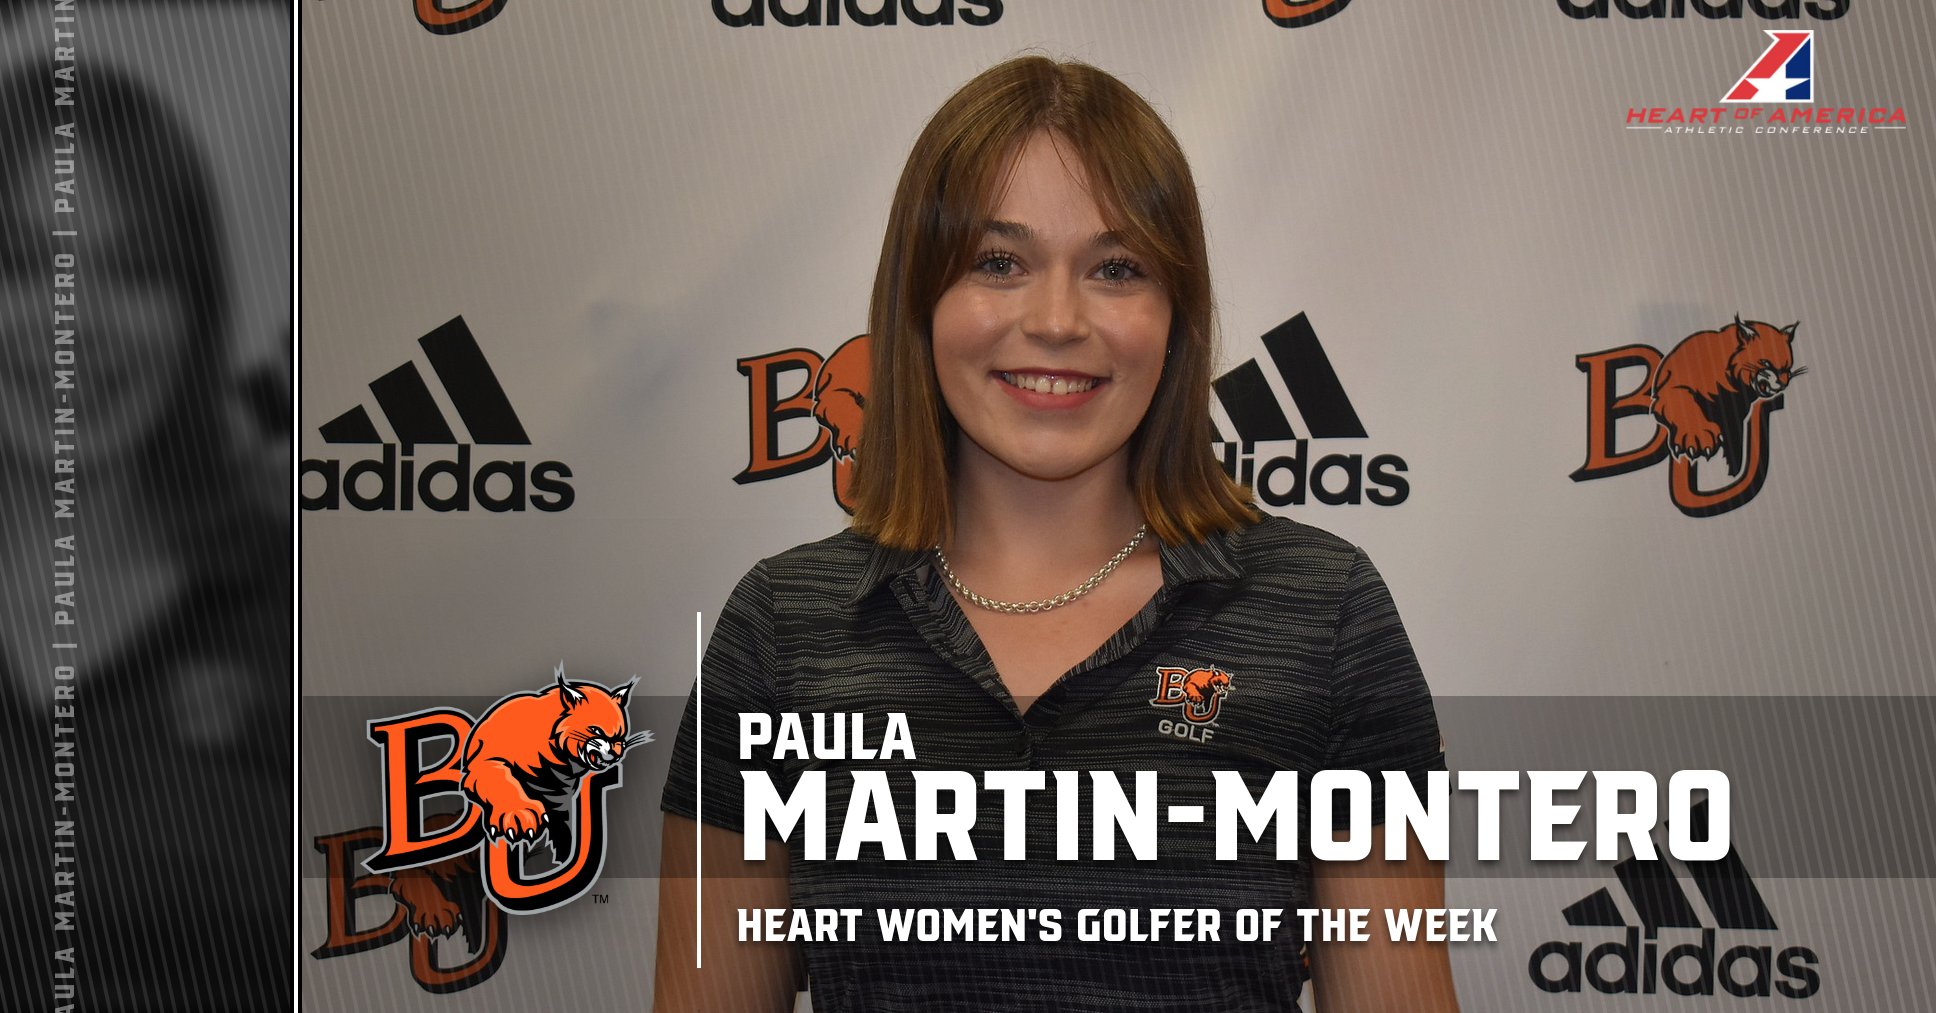 Martin-Montero Selected Heart Women’s Golfer of the Week